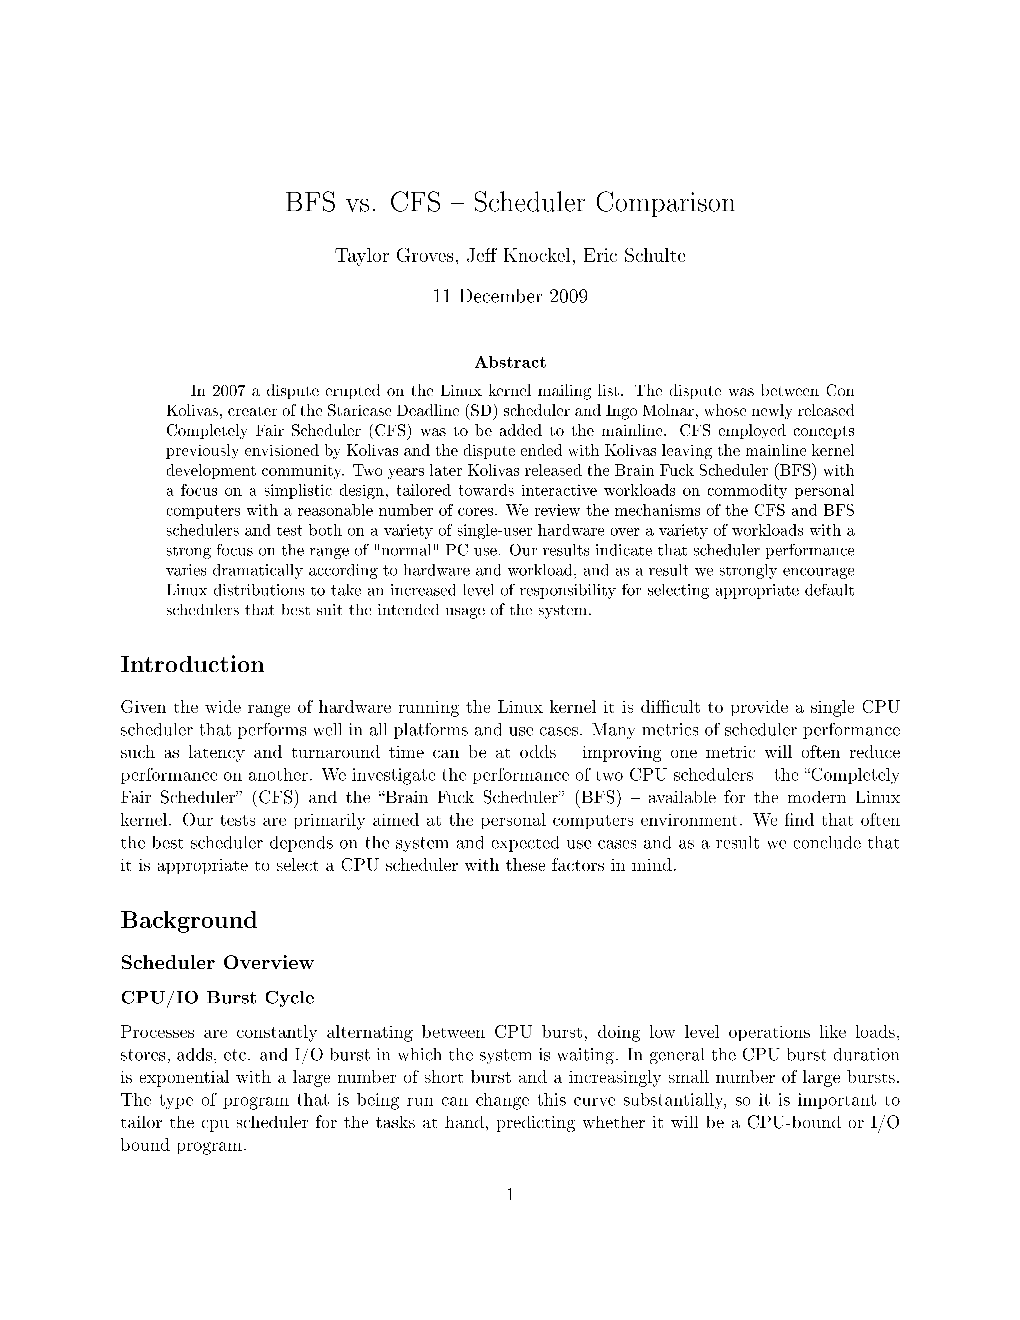 BFS Vs. CFS Scheduler Comparison Introduction Background